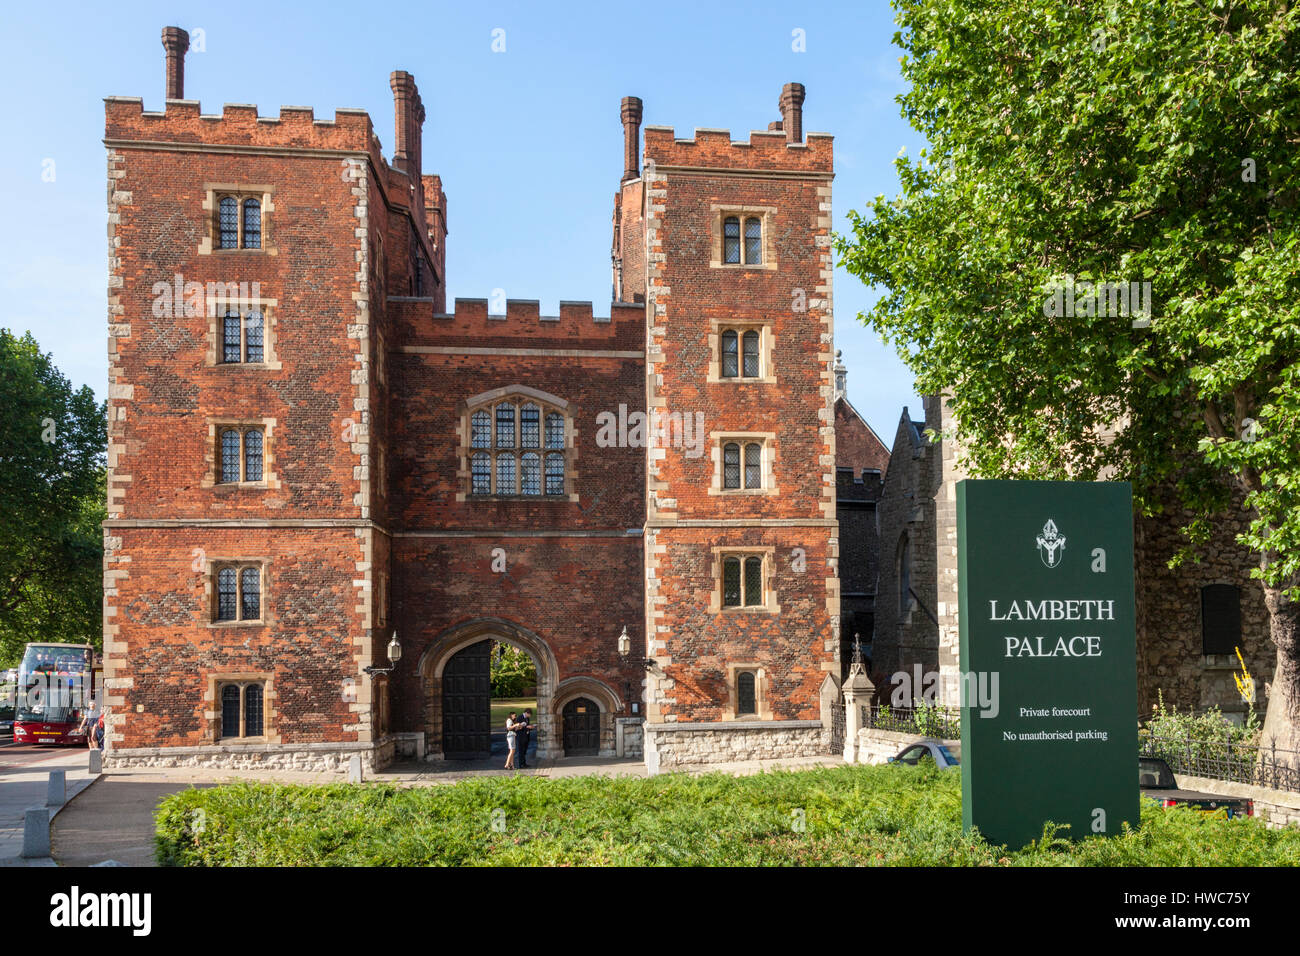 Lambeth Palace, London, UK Banque D'Images